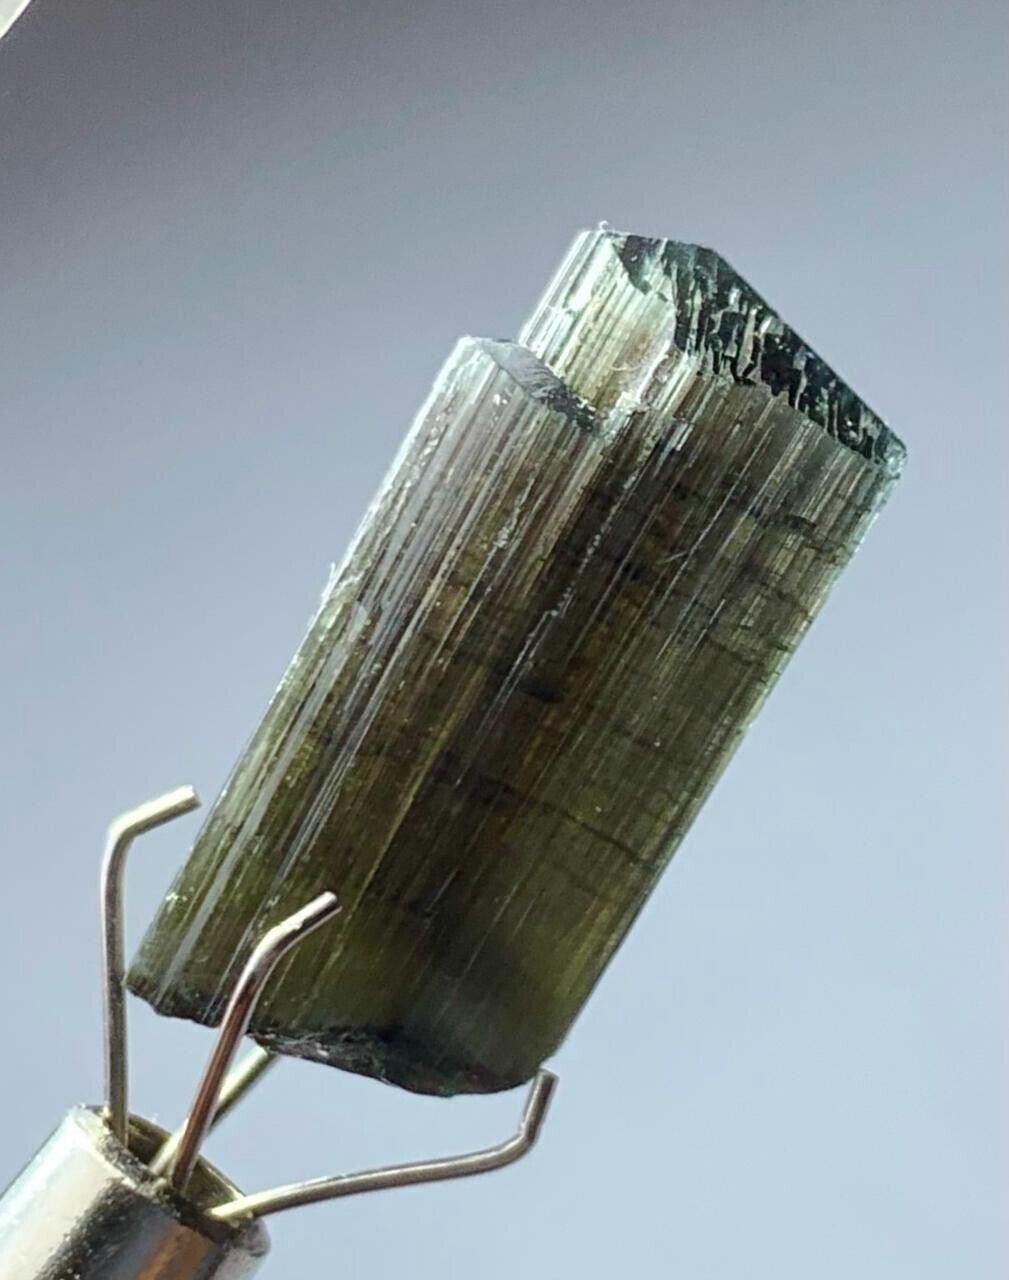 7.5 Carat beautiful terminatid tourmaline crystal from Afghanistan